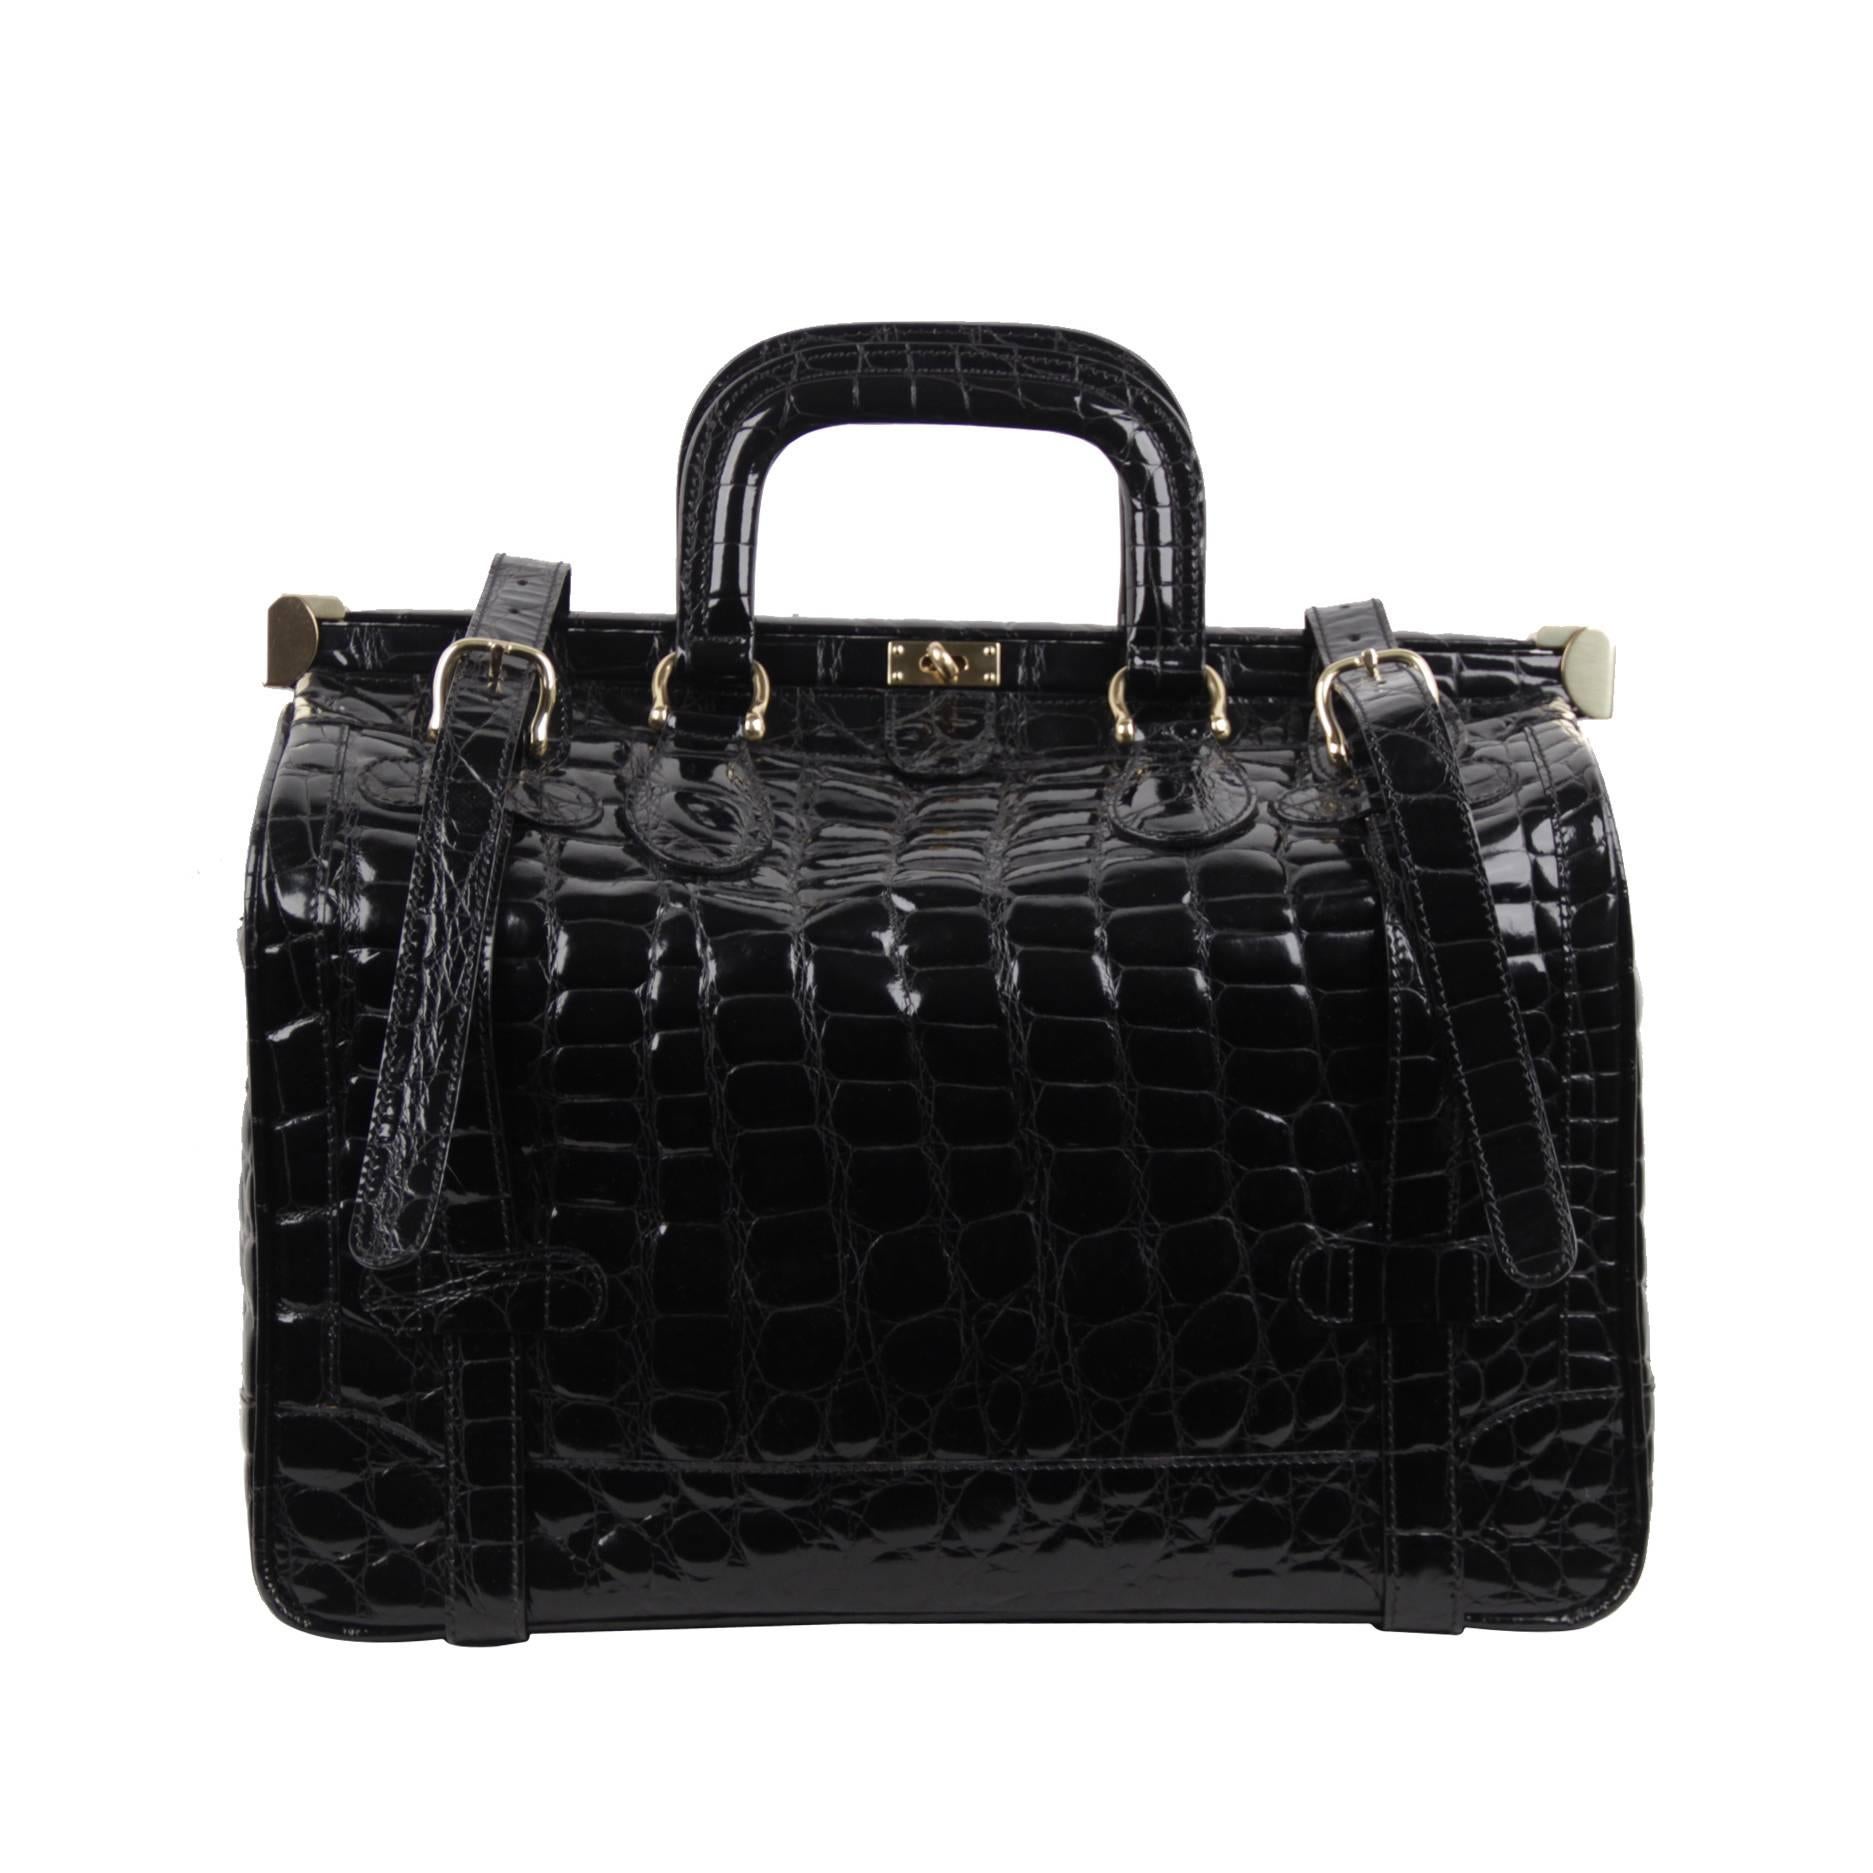 Aldo Raffa Italian Black Embossed Patent Leather Travel Bag Carry On Suitcase